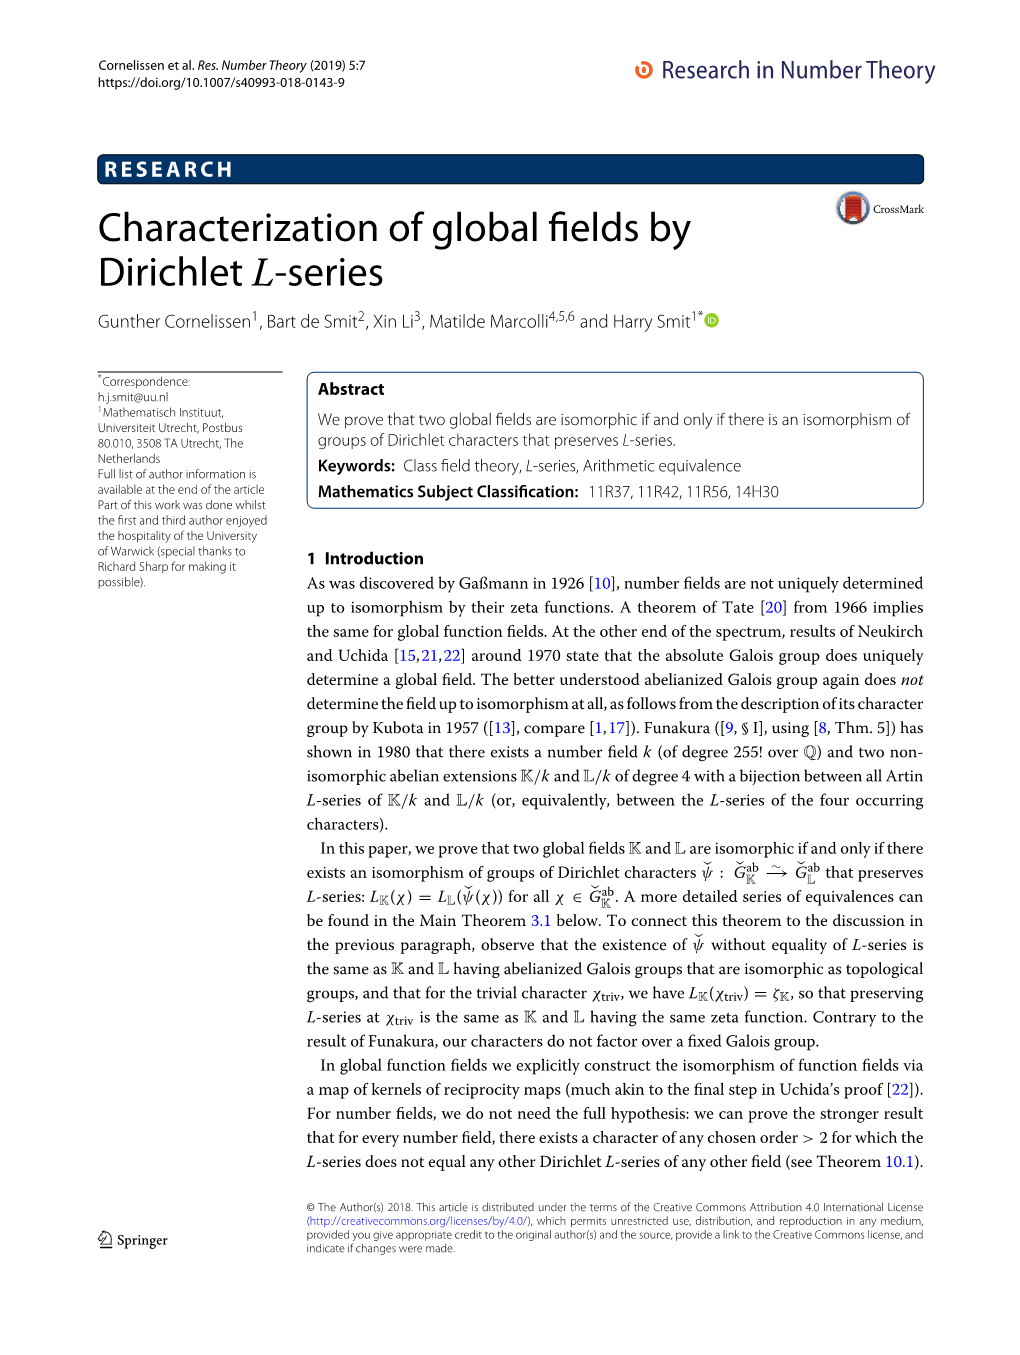 Characterization of Global Fields by Dirichlet L-Series